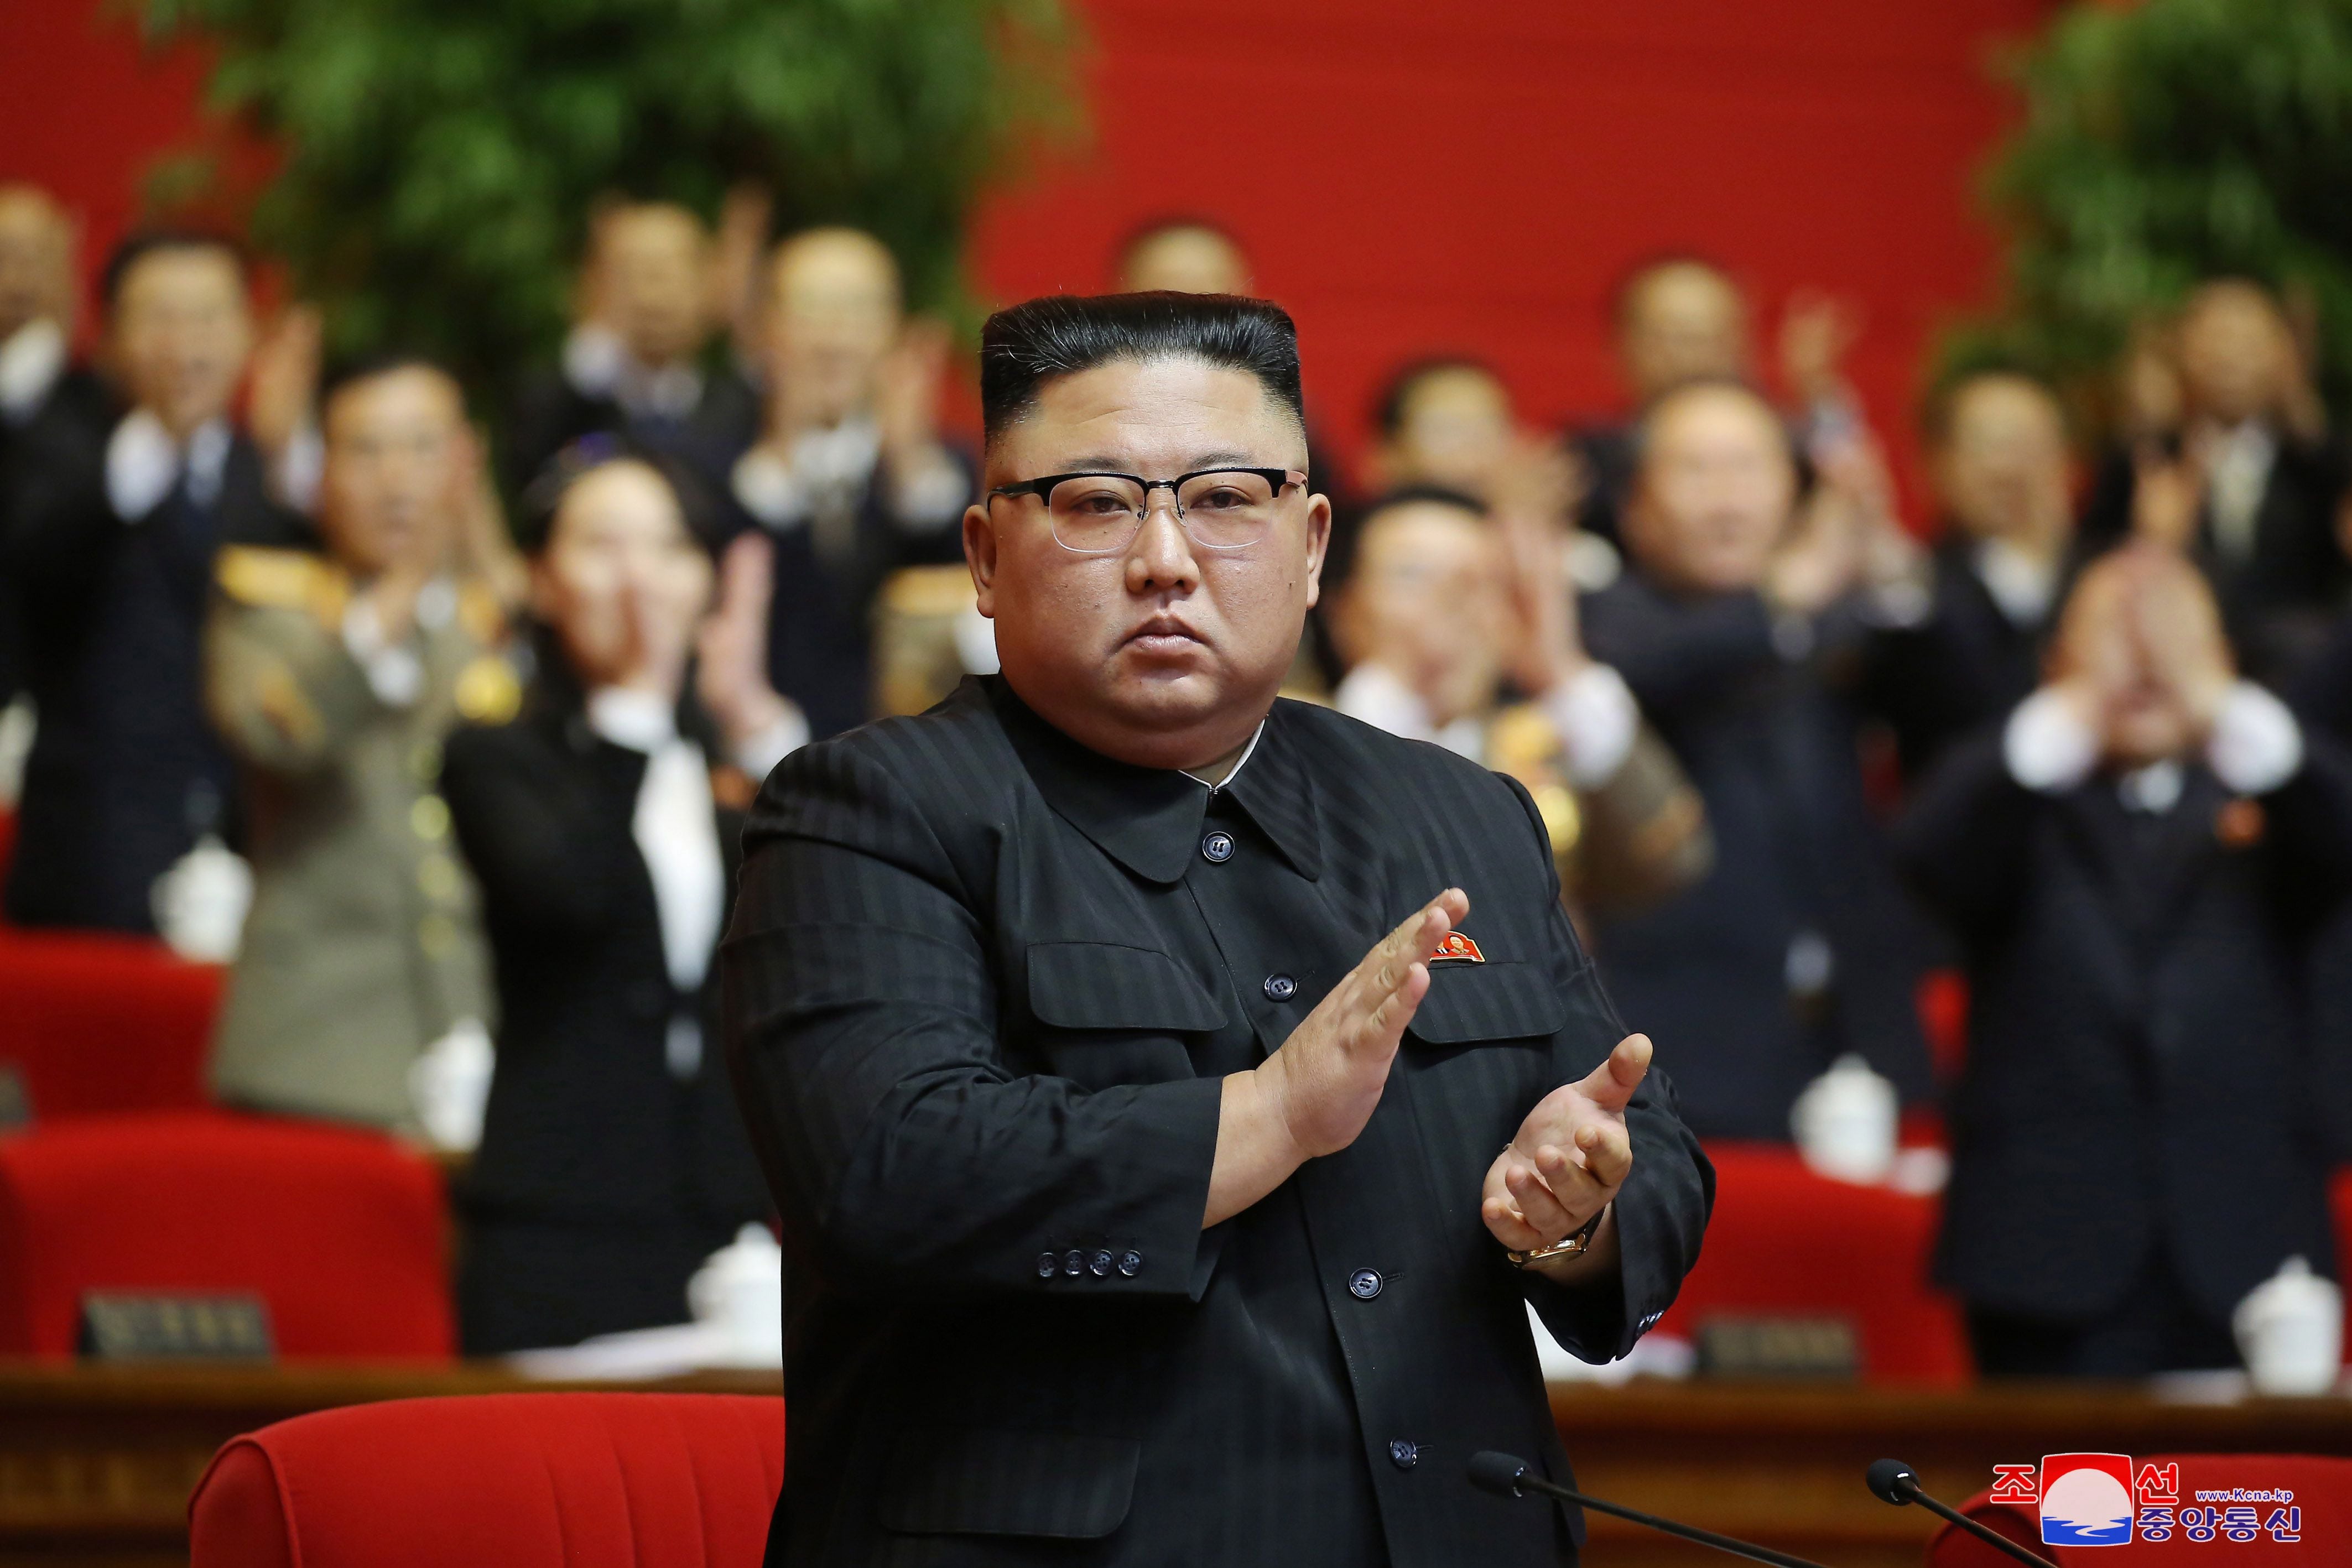 El dictador norcoreano Kim Jong-un. (FOTO: EFE)
